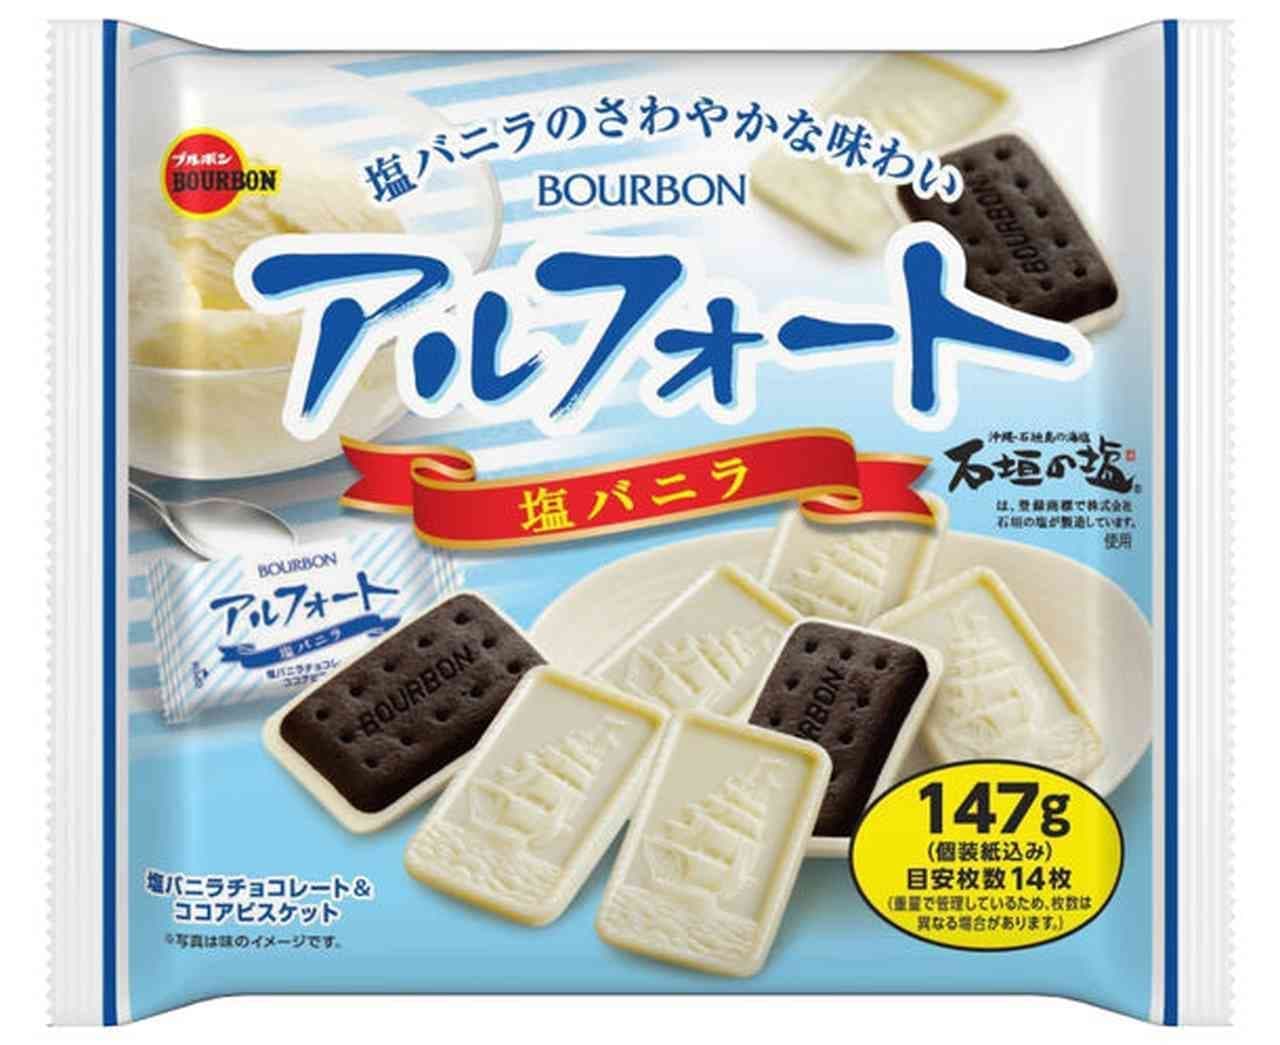 Bourbon "White Alfort Mini Chocolate